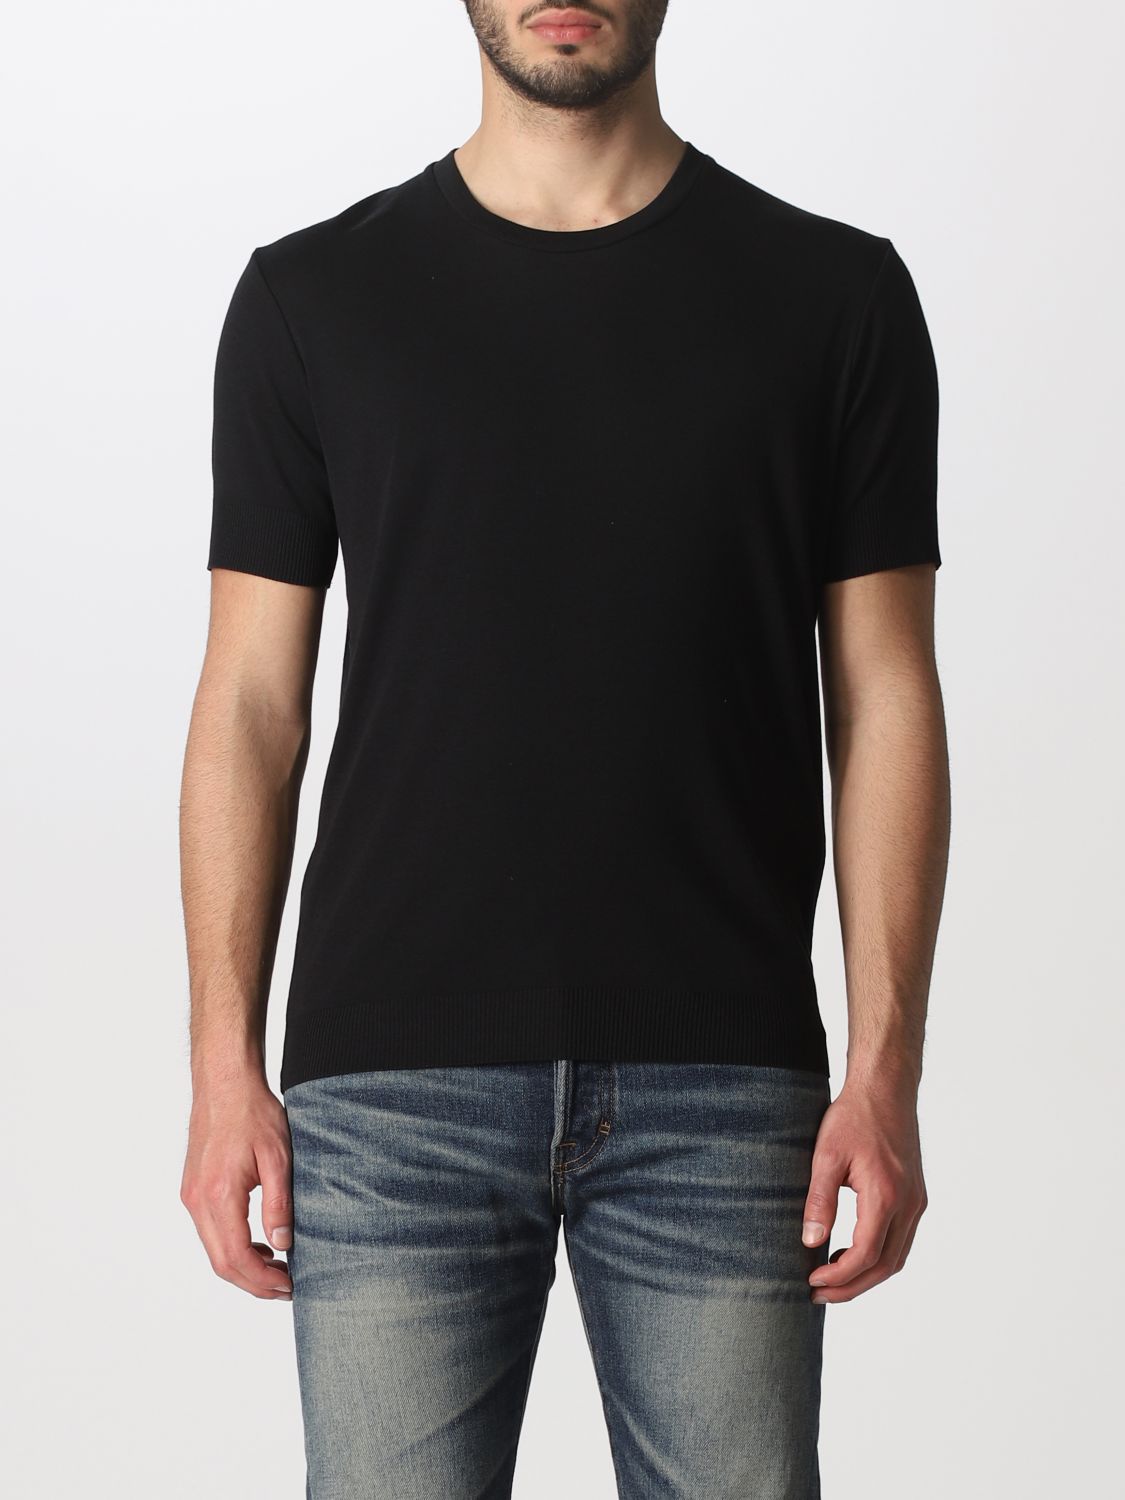 TOM FORD: T-shirt in cotton blend - Black | Tom Ford t-shirt ...